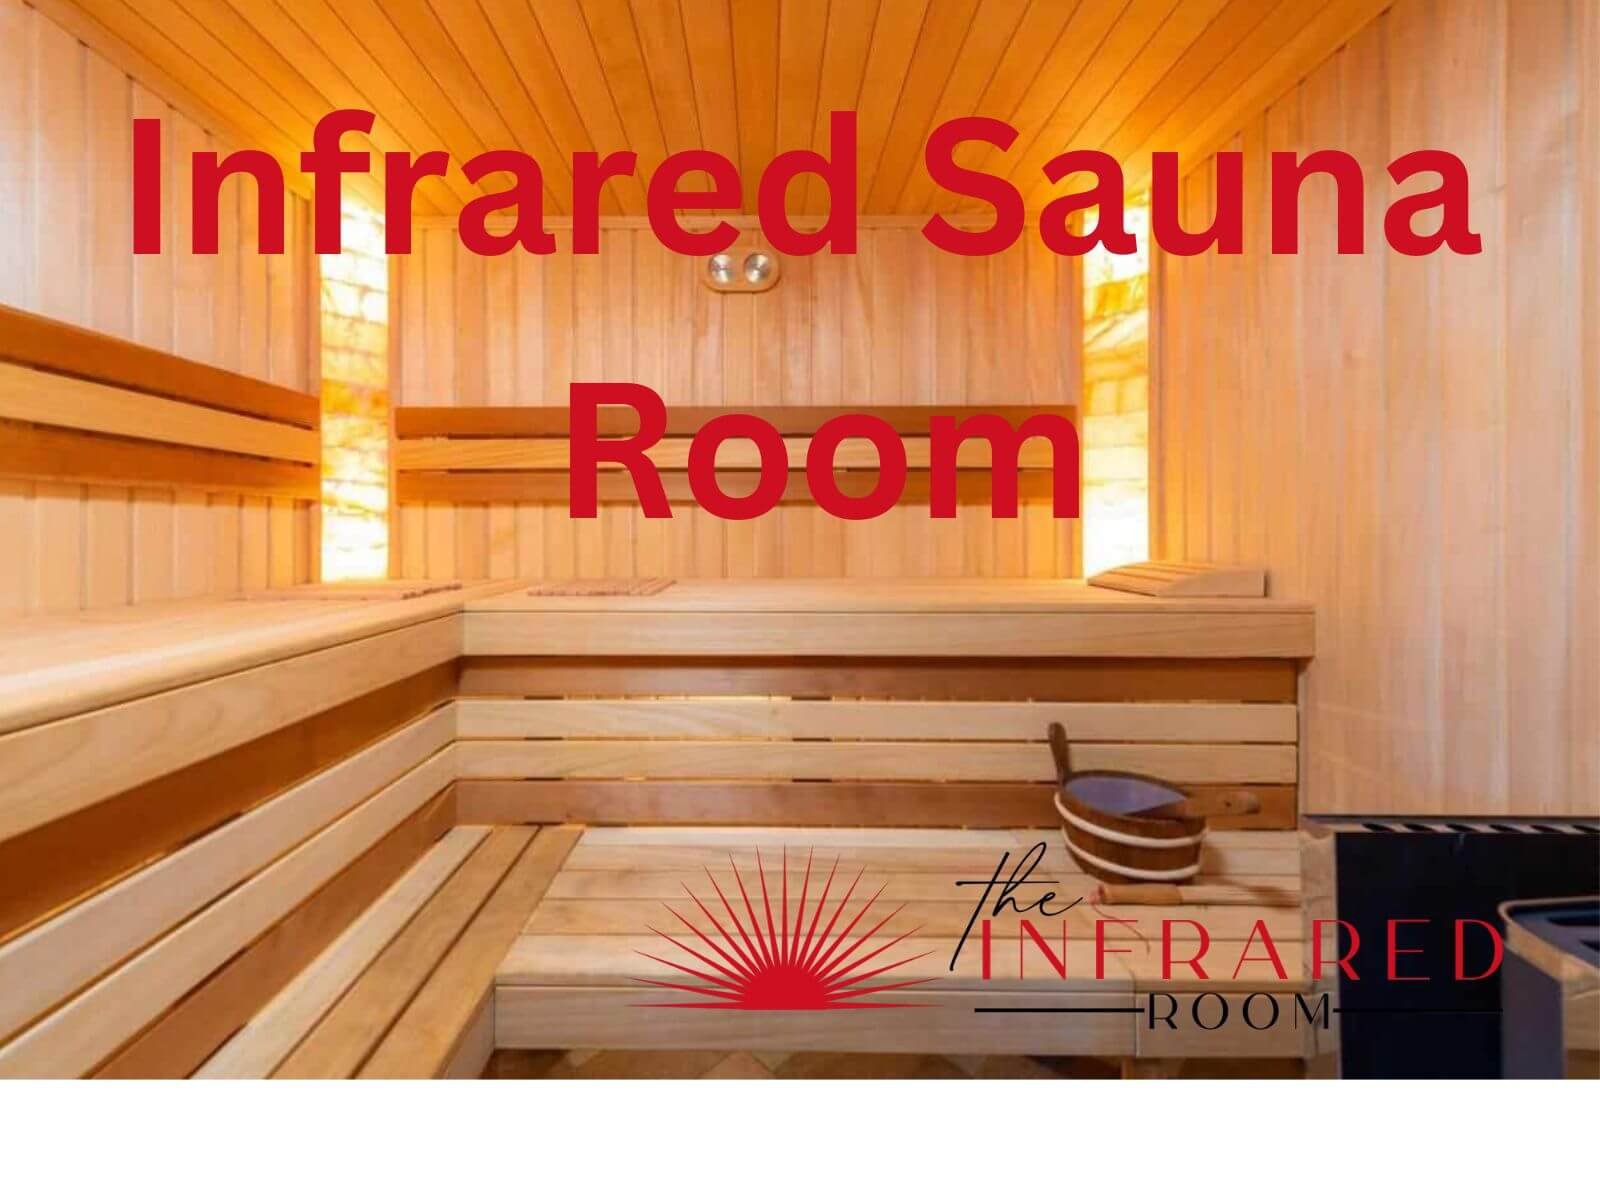 Sauna, Health Benefits, Relaxation & Detoxification